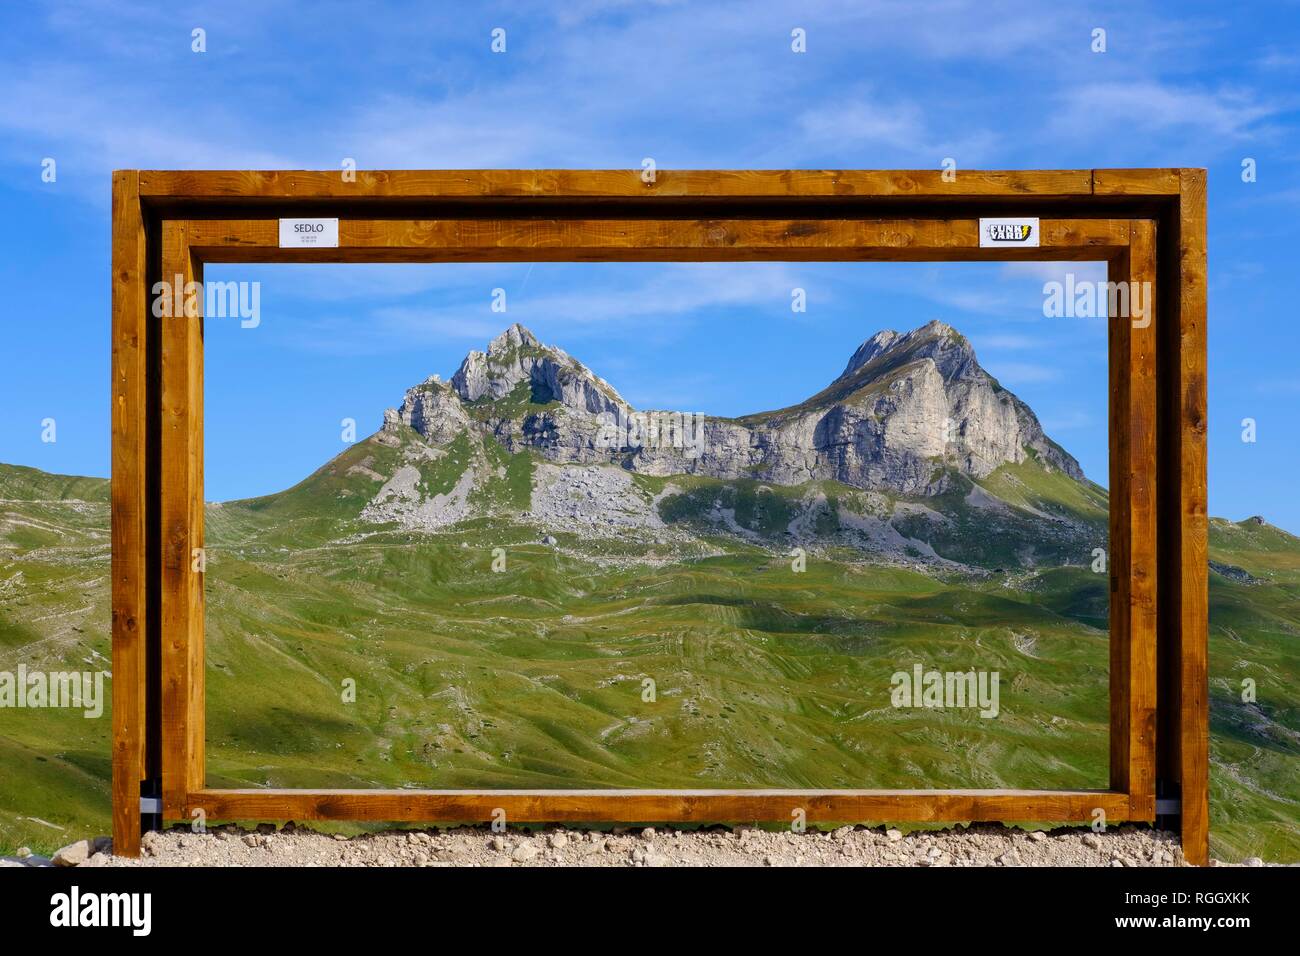 Holzrahmen in Sicht, Sedlo Berg, Durmitor Massiv, Nationalpark Durmitor, Provinz Savnik, Montenegro Stockfoto